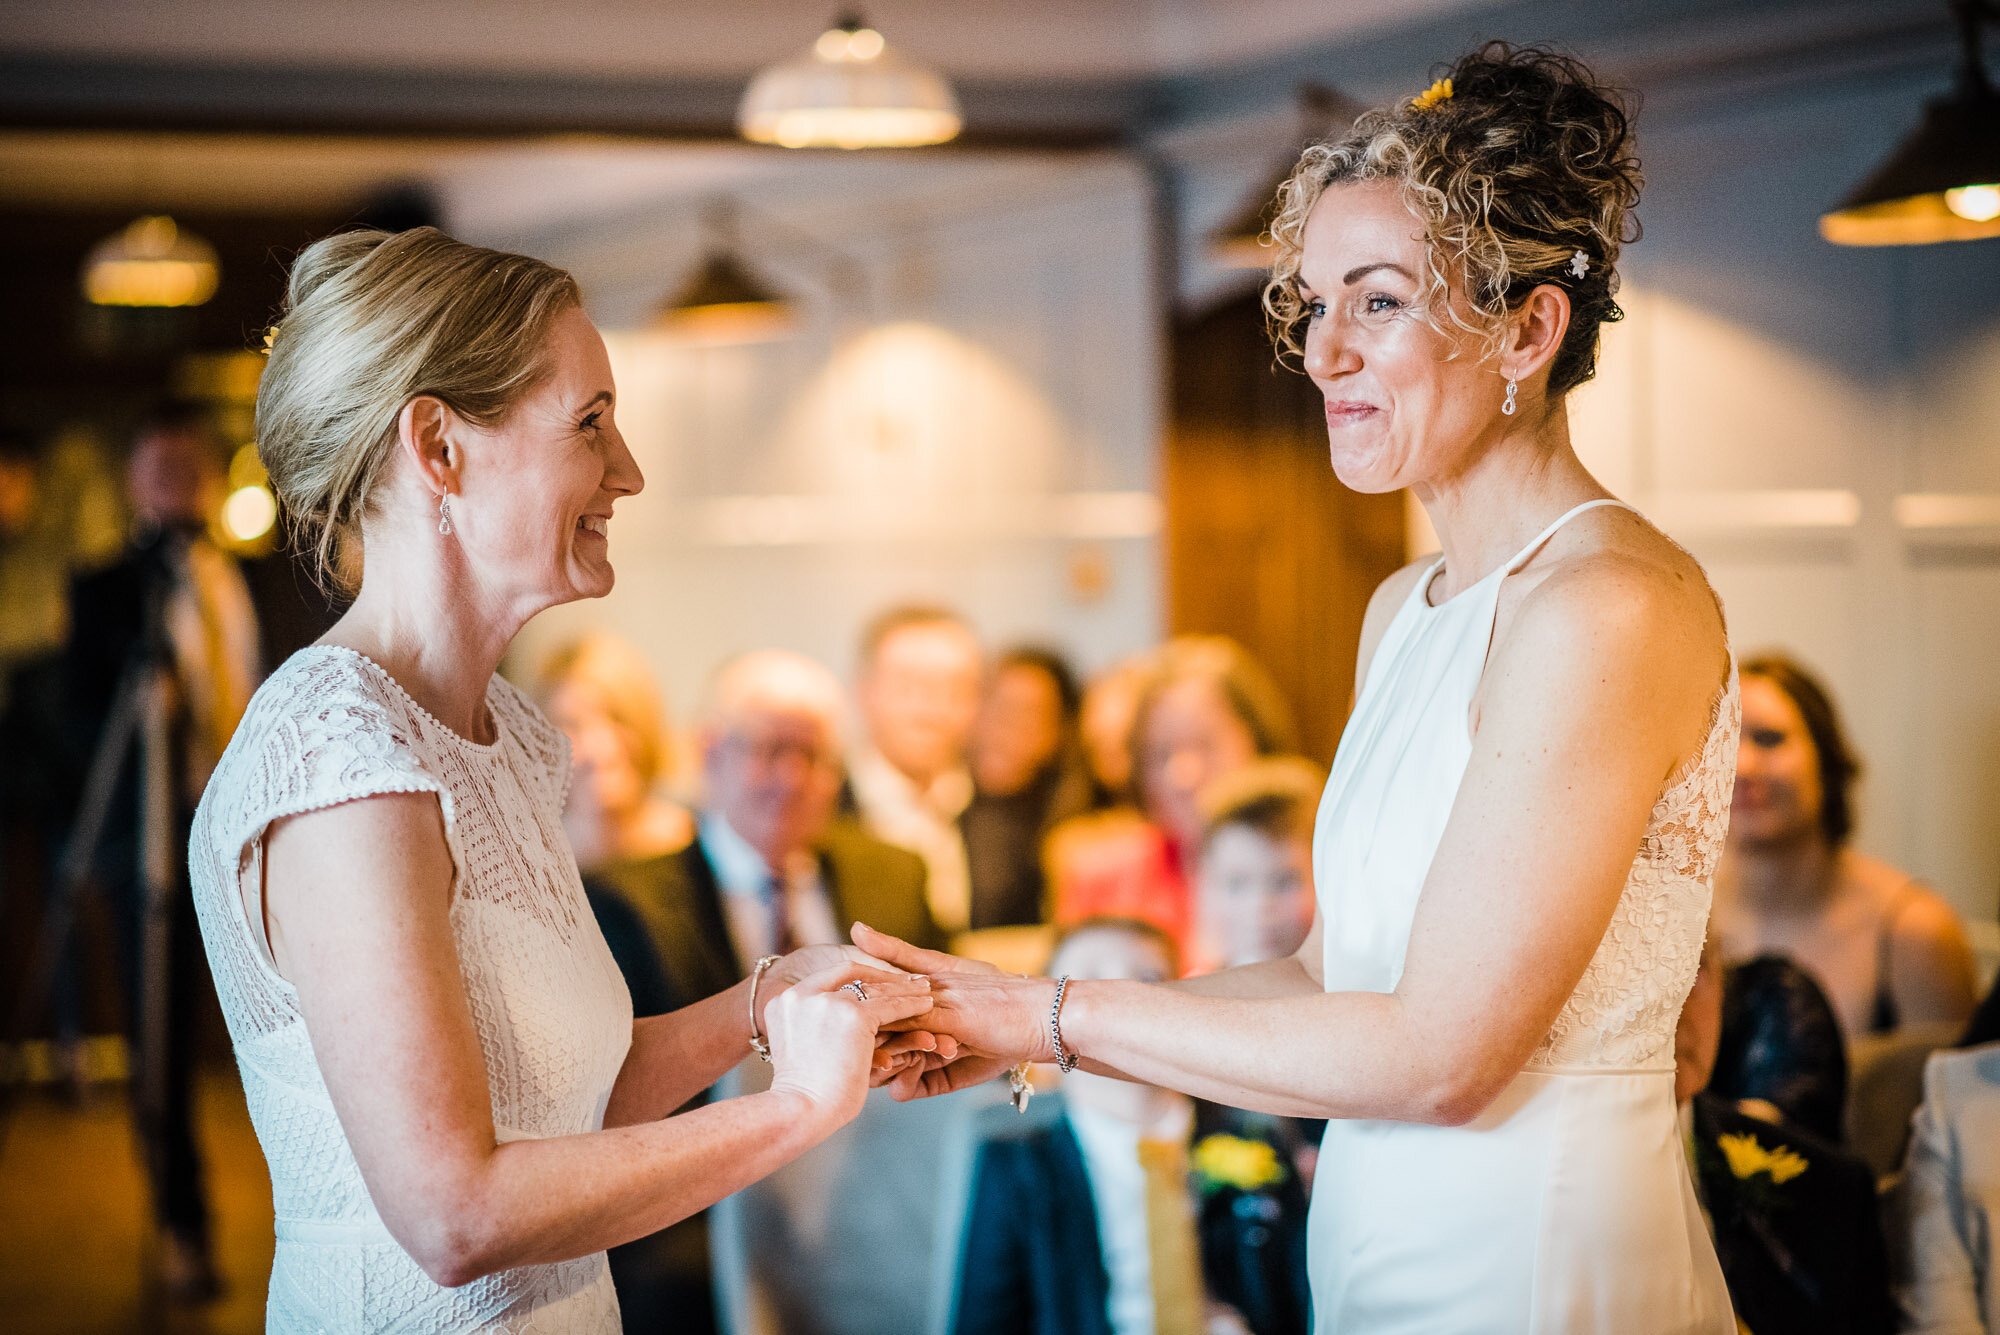 same-sex-wedding-hotel-cromwell-stevenage-hertfordshire-pike-photography-2020-8.jpg